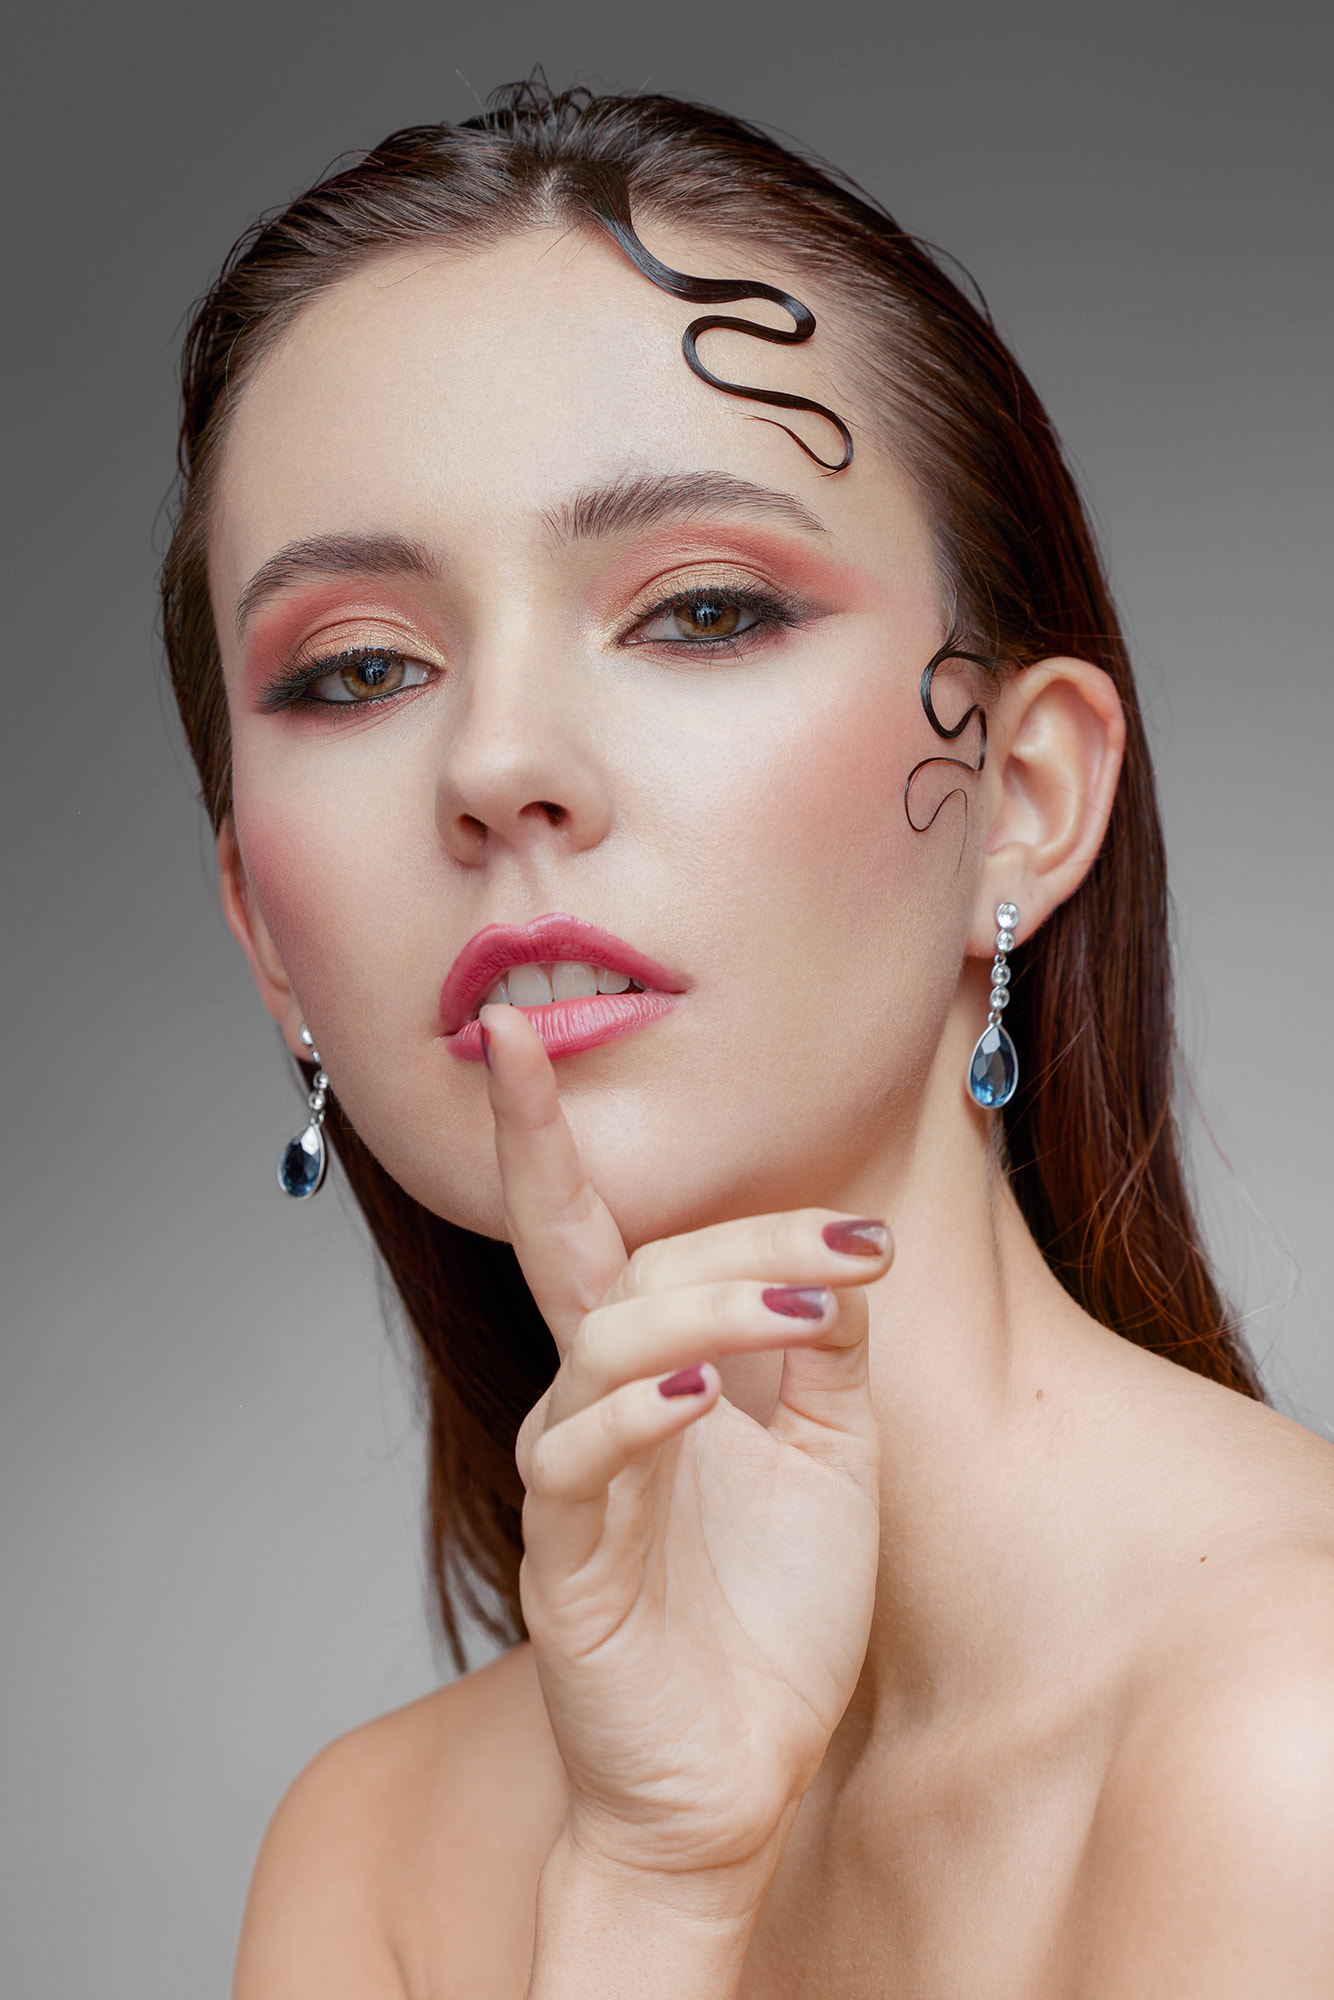 Bruno Birkhofer Women Redhead Eyeliner Makeup Earring Finger On Lips Portrait Simple Background 1334x2000